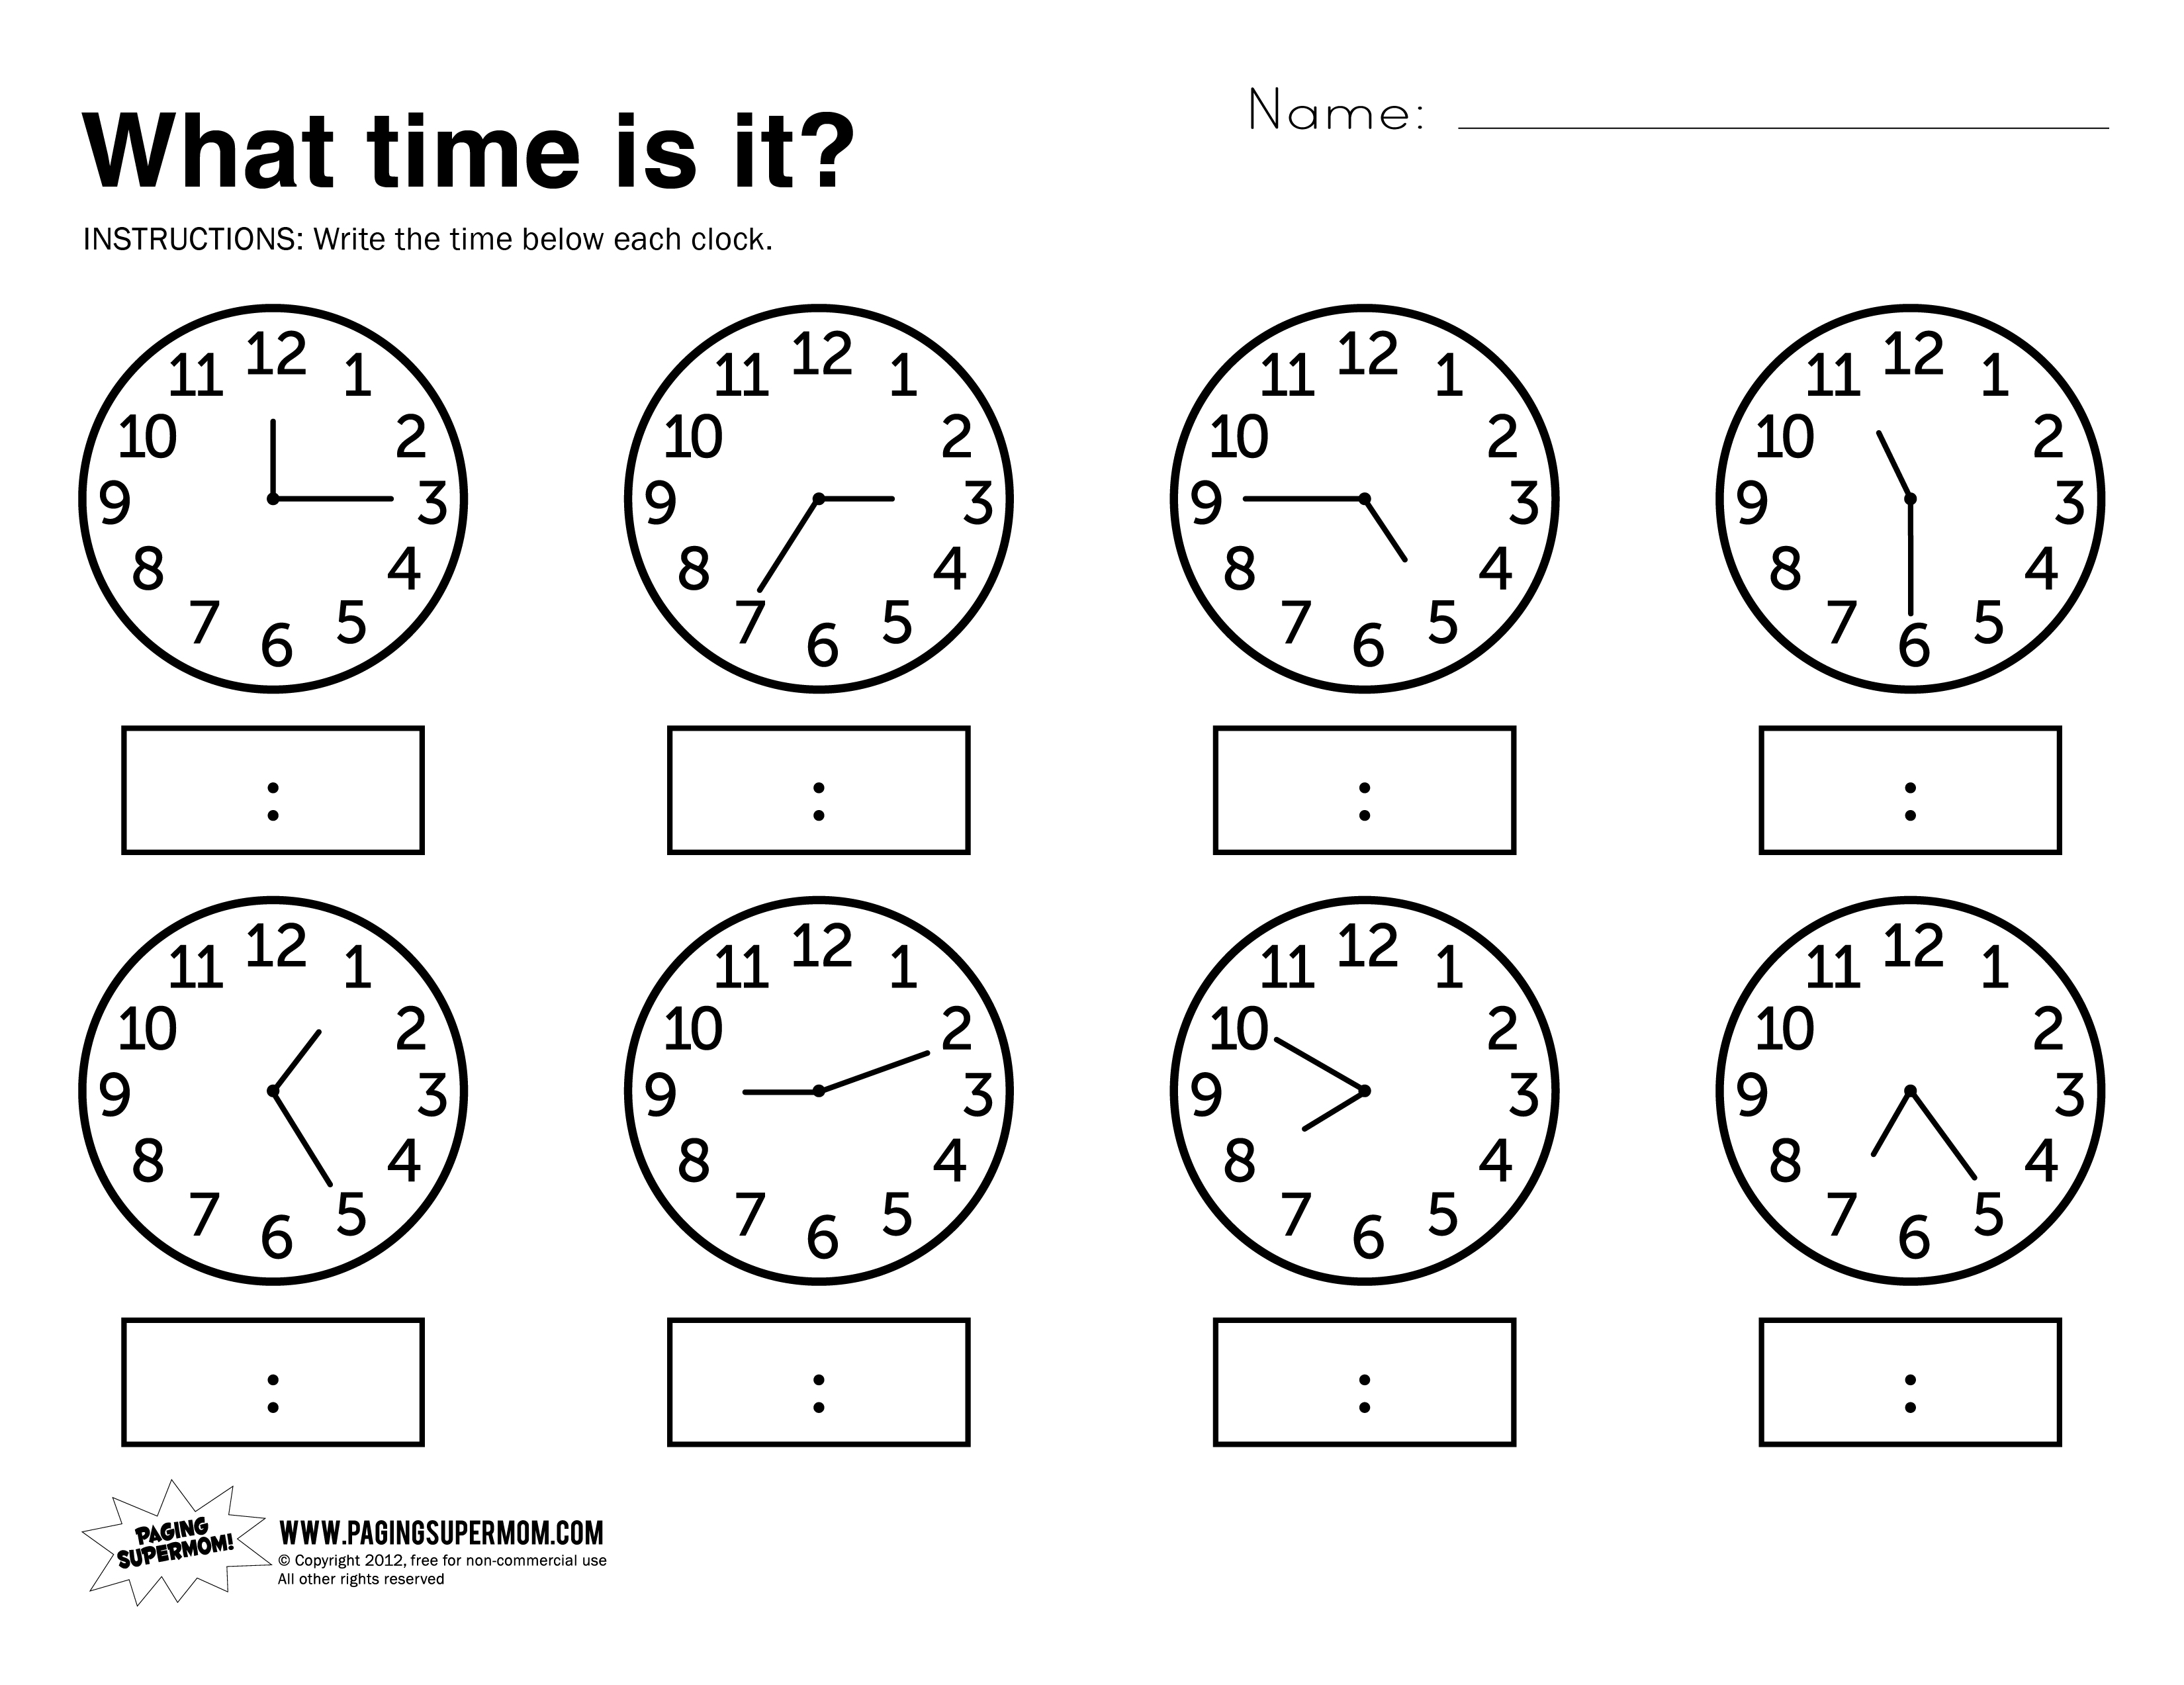 Printable Telling Time Worksheets